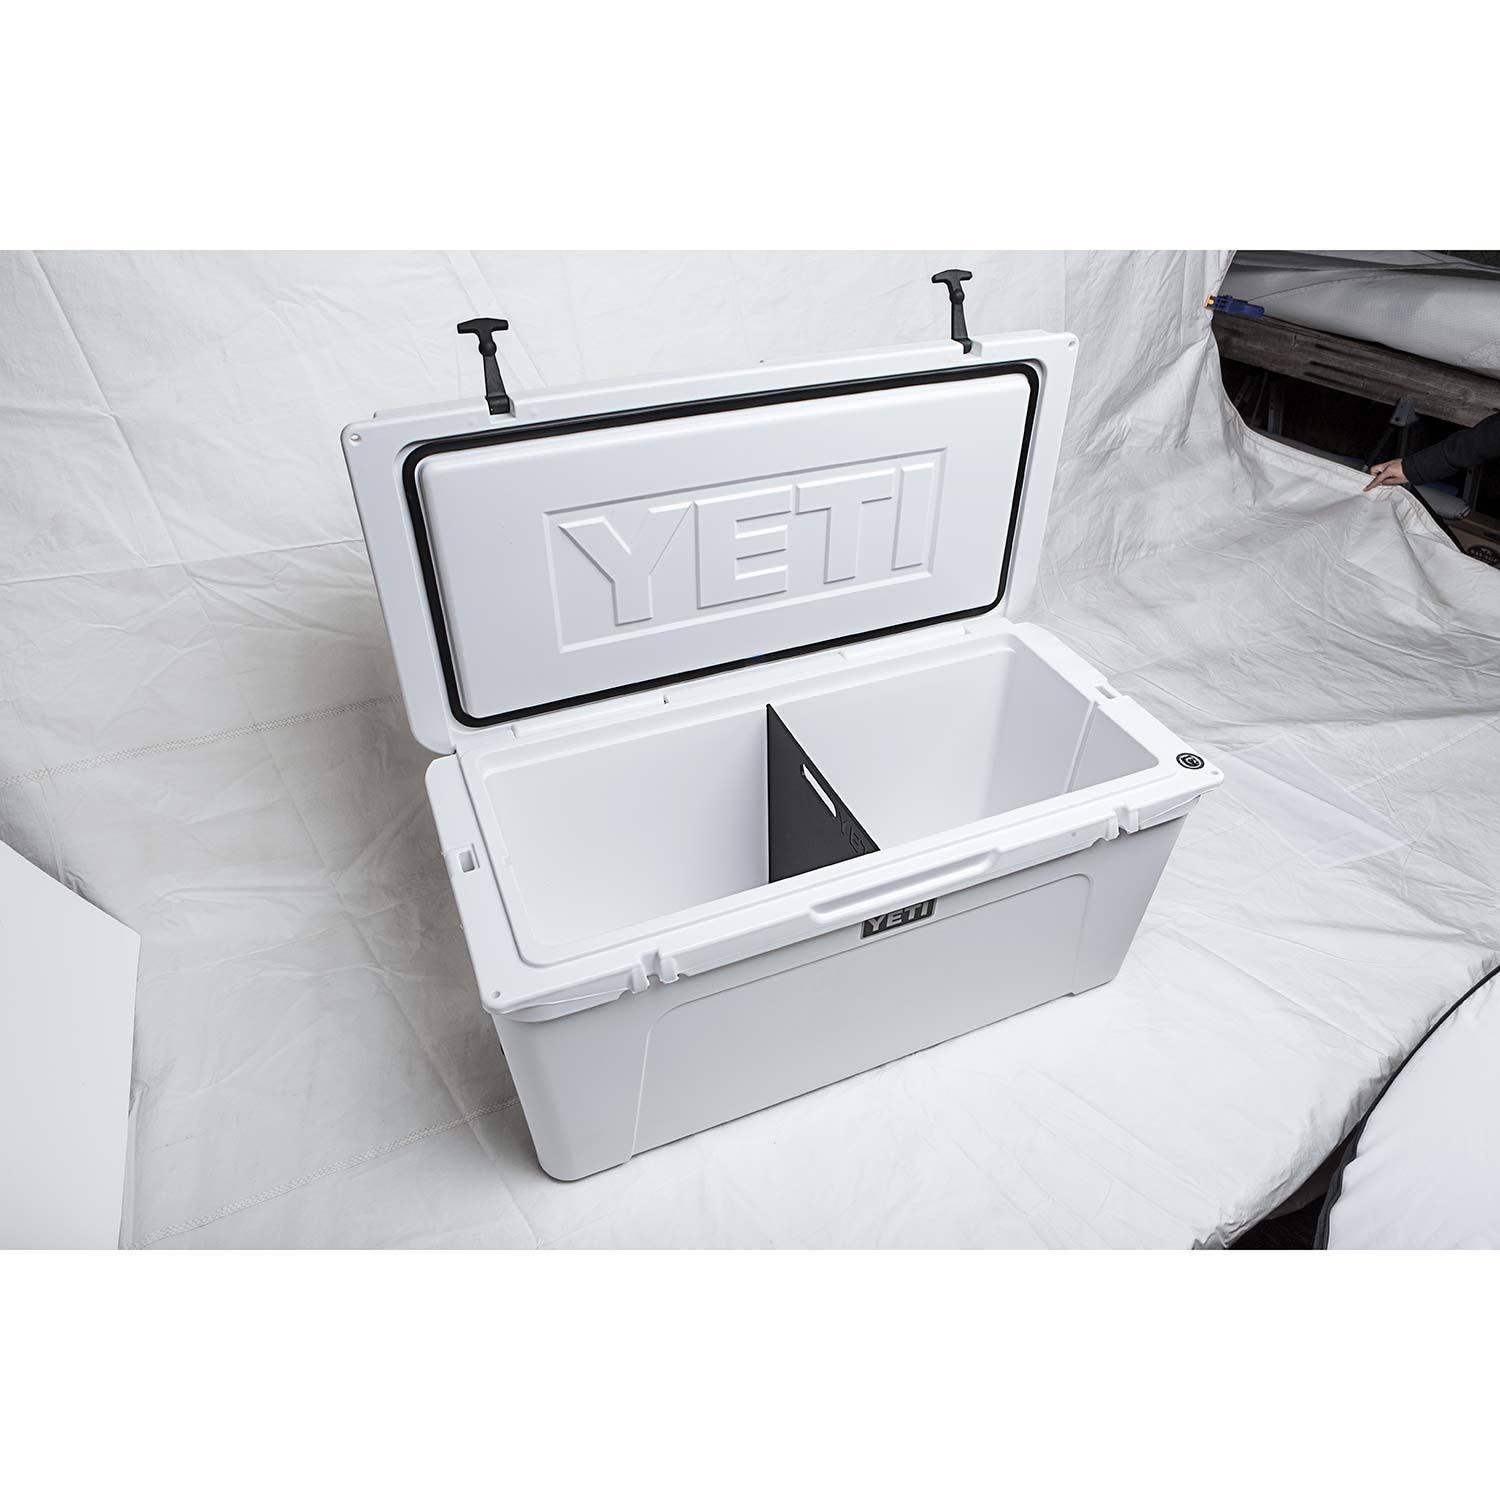 Grippi Cooler Divider & Cutting Board Yeti Tundra Compatible (Size